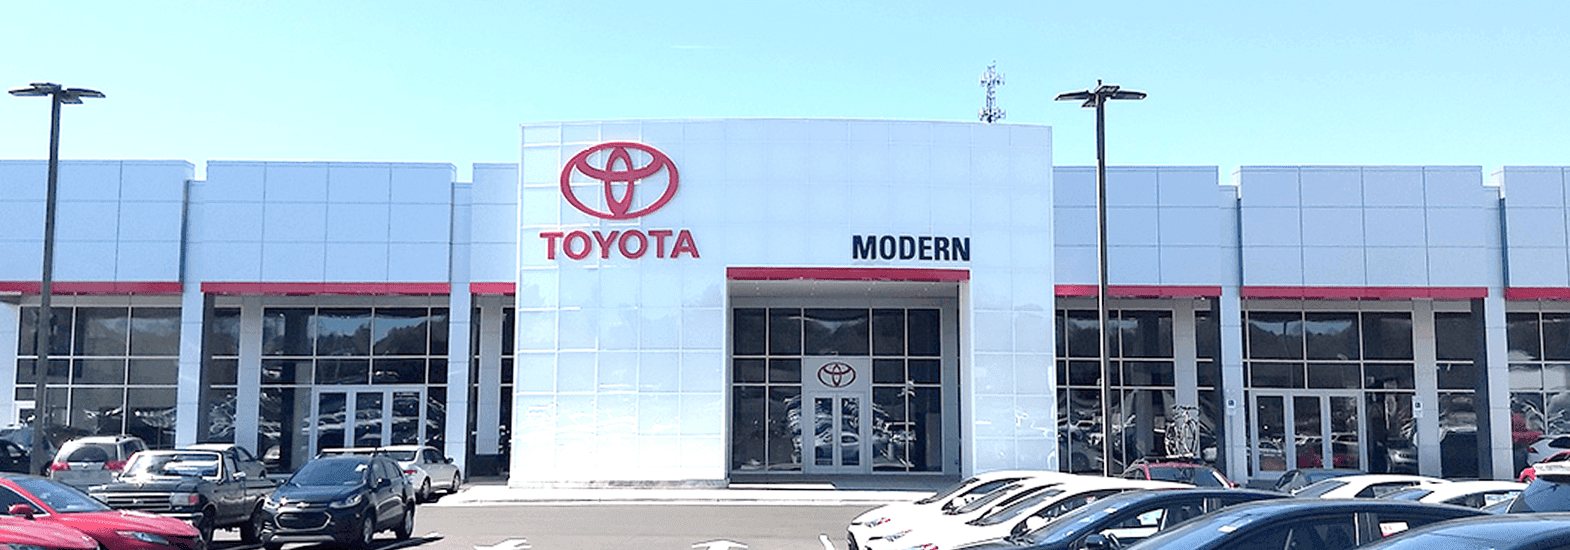 CDK Elead CRM Helps Keep Modern Toyota on the Upswing